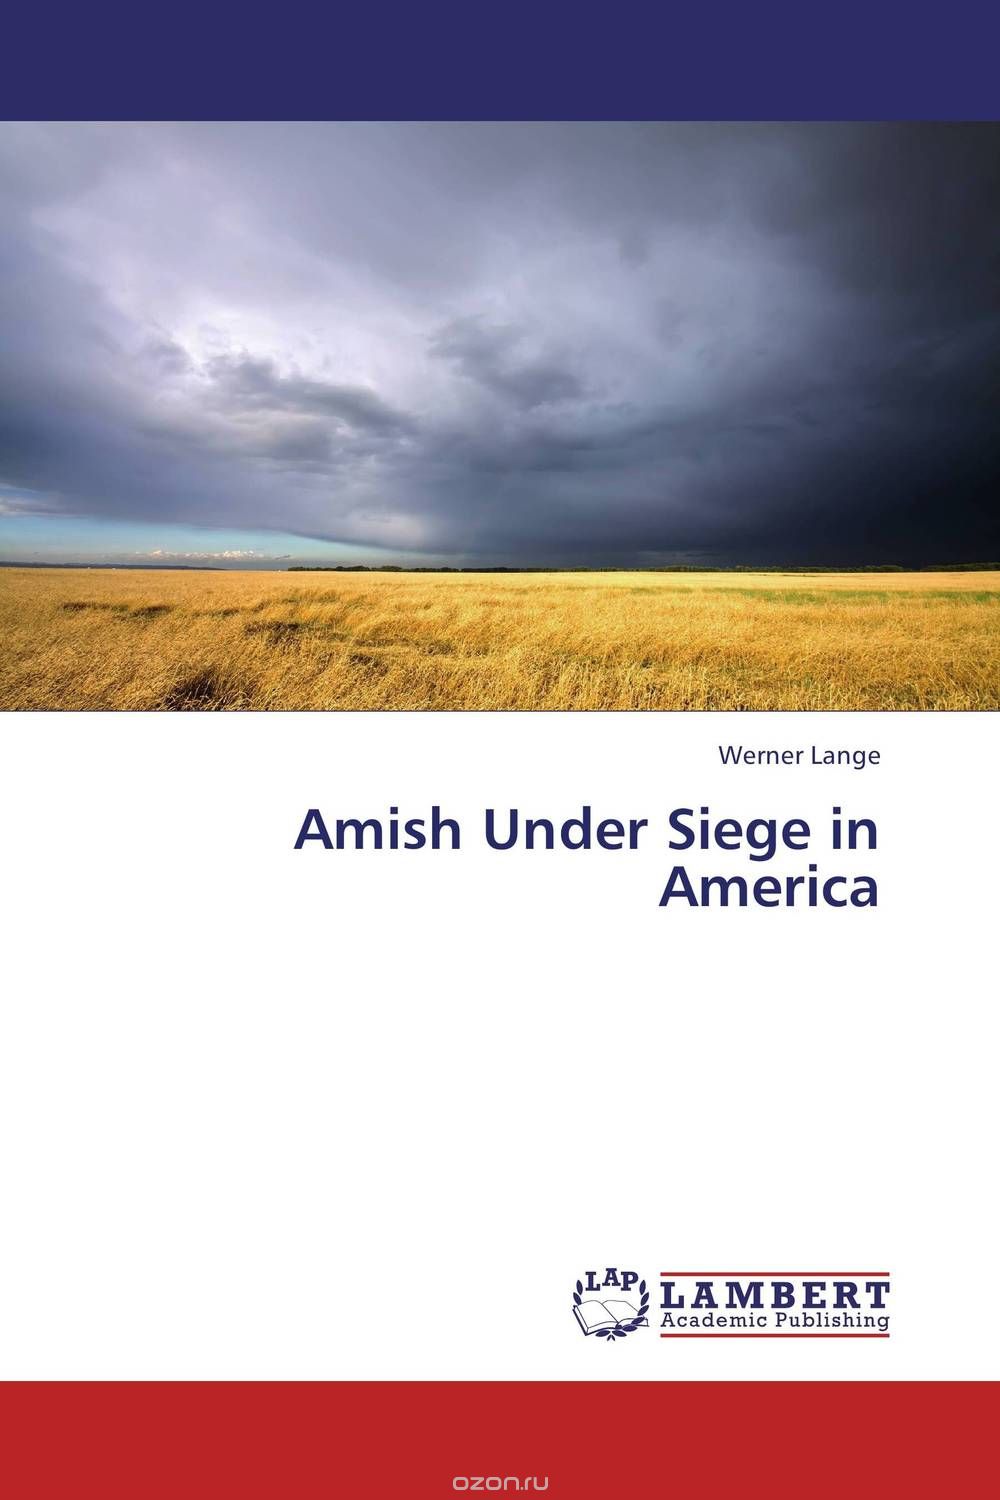 Скачать книгу "Amish Under Siege in America"